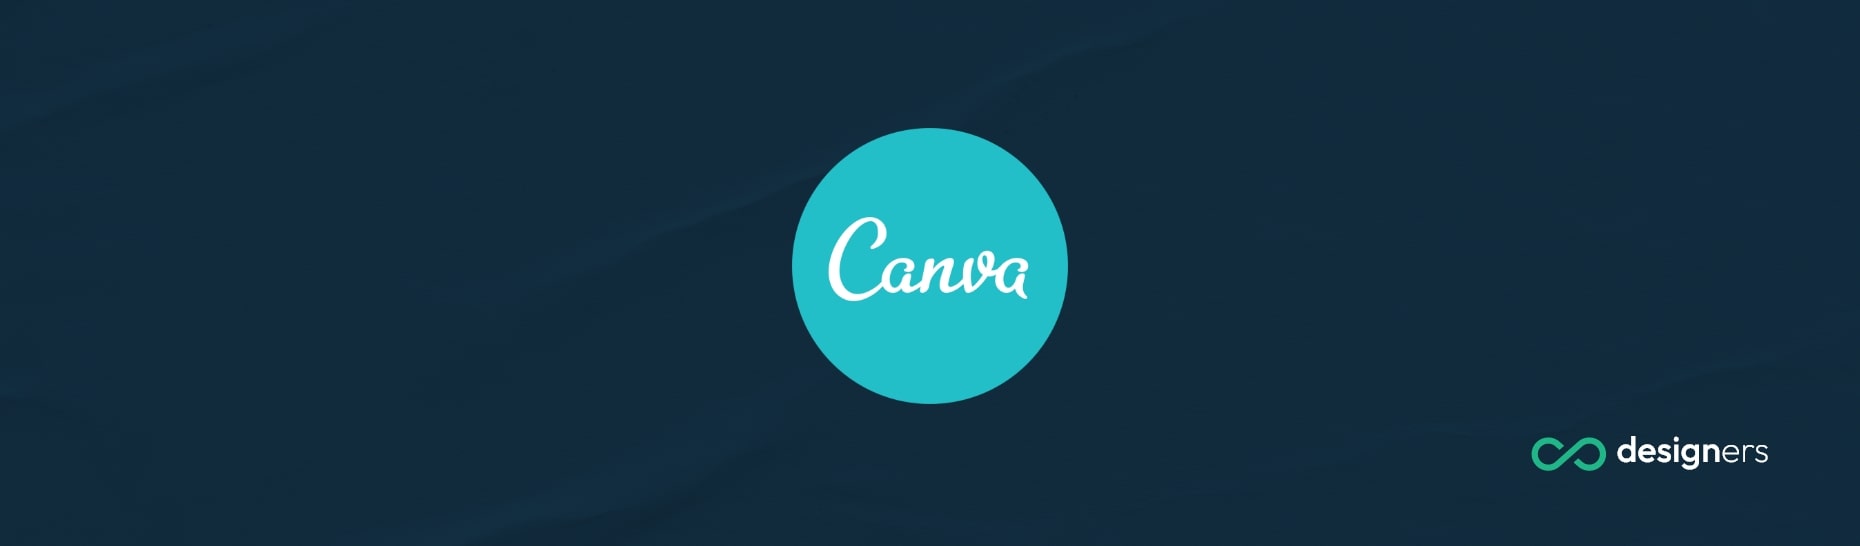 Does Canva Make Money?